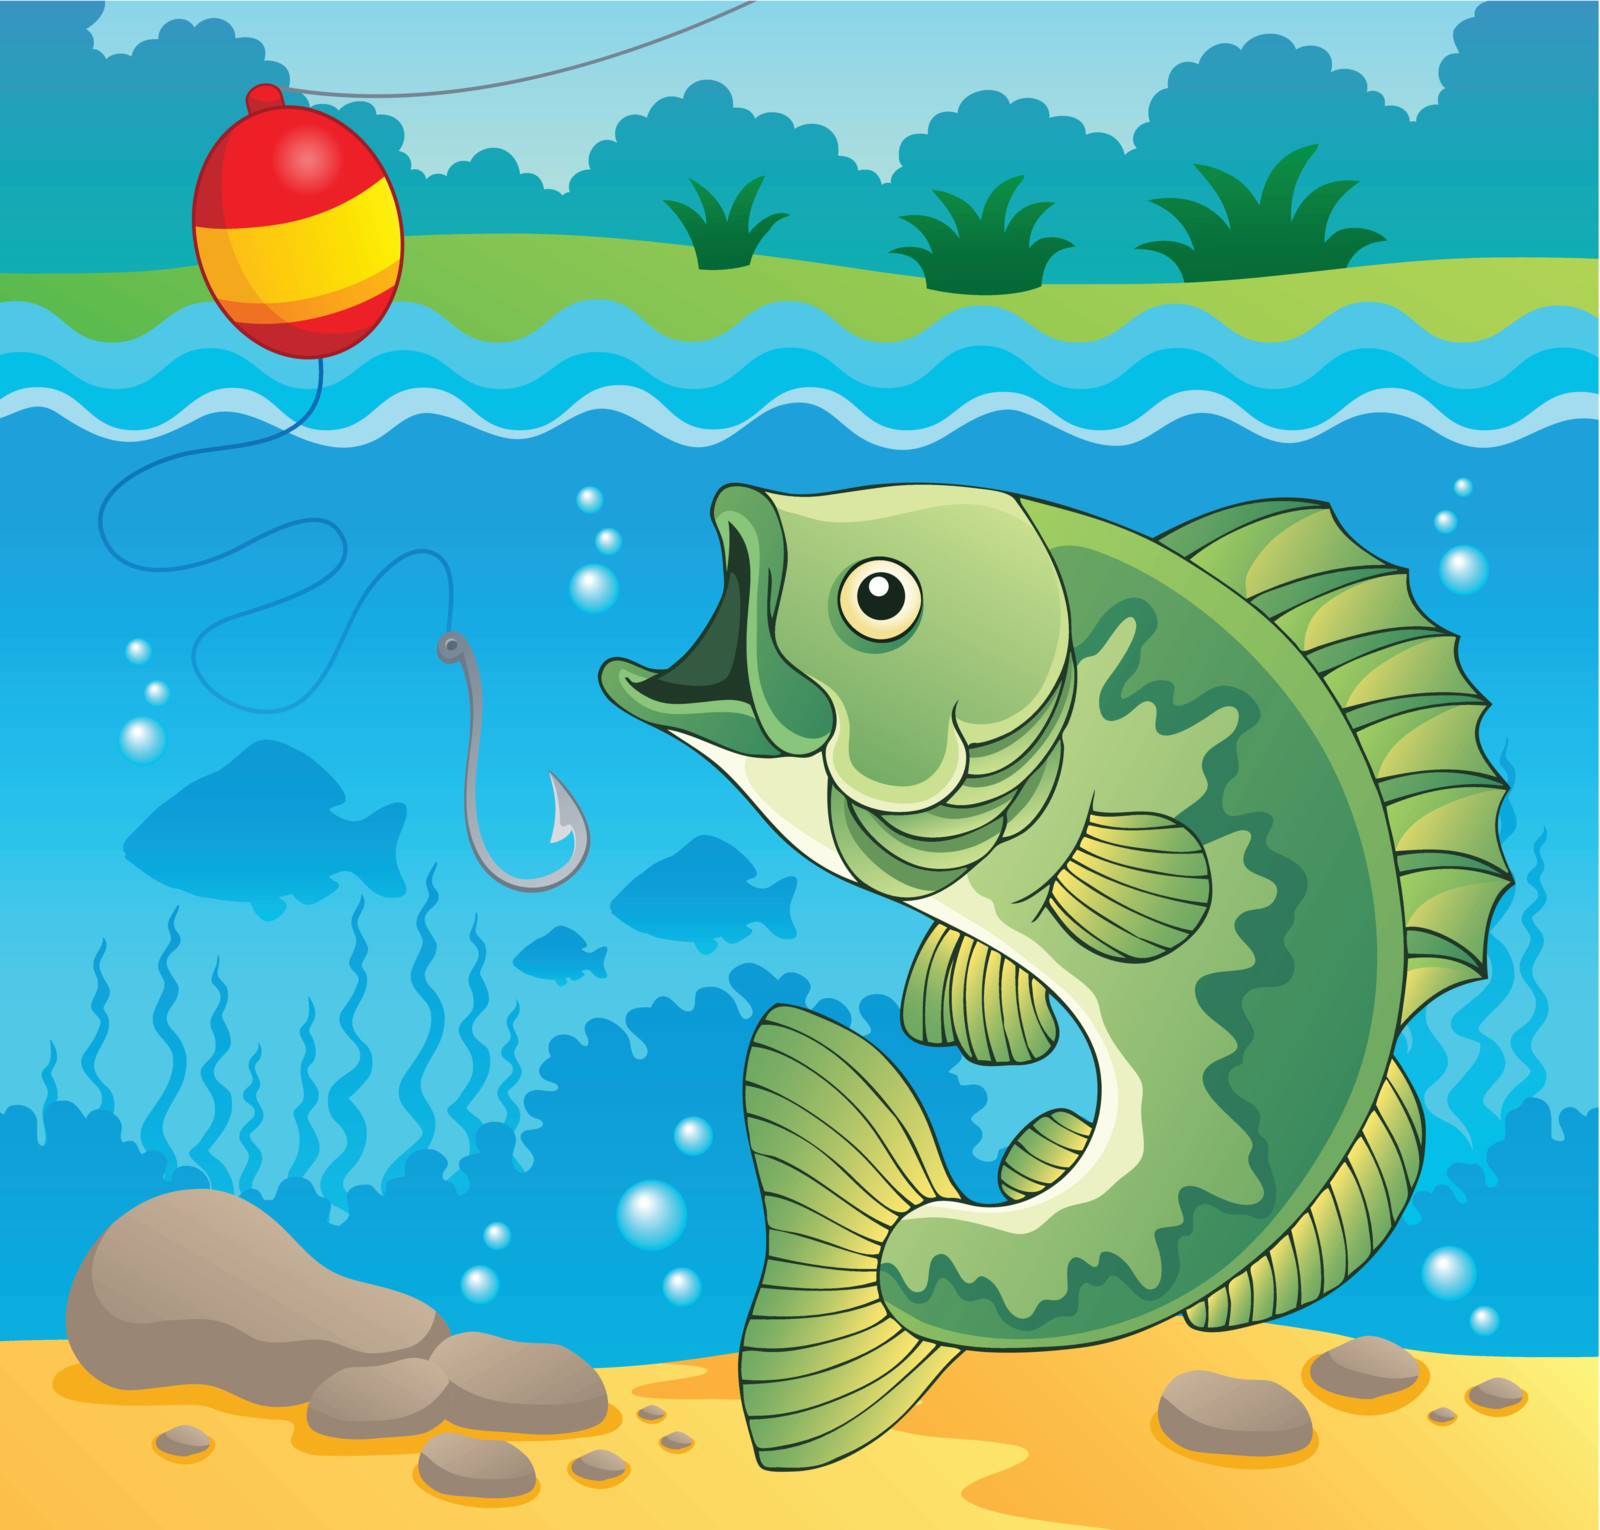 Freshwater fish theme image 4 - vector illustration.